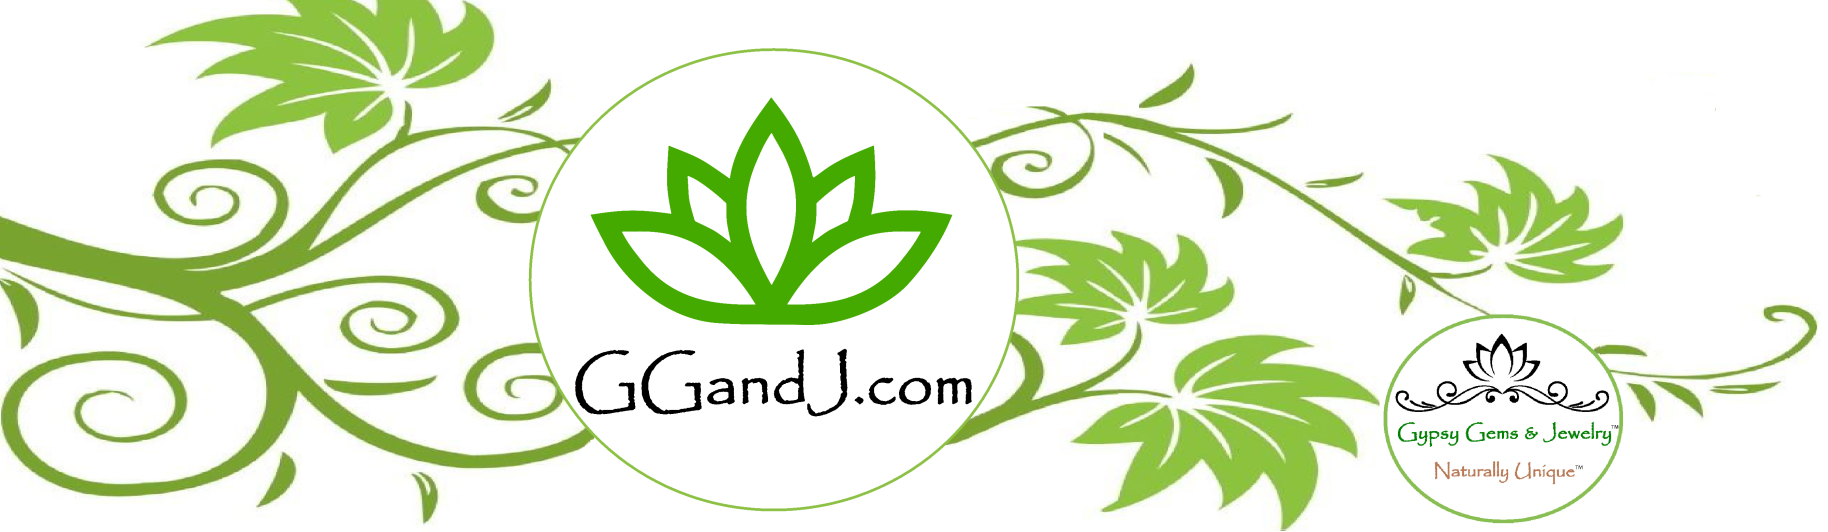 GGandJ.com Gypsy Gems and Jewelry Reptanicals Healing Salve